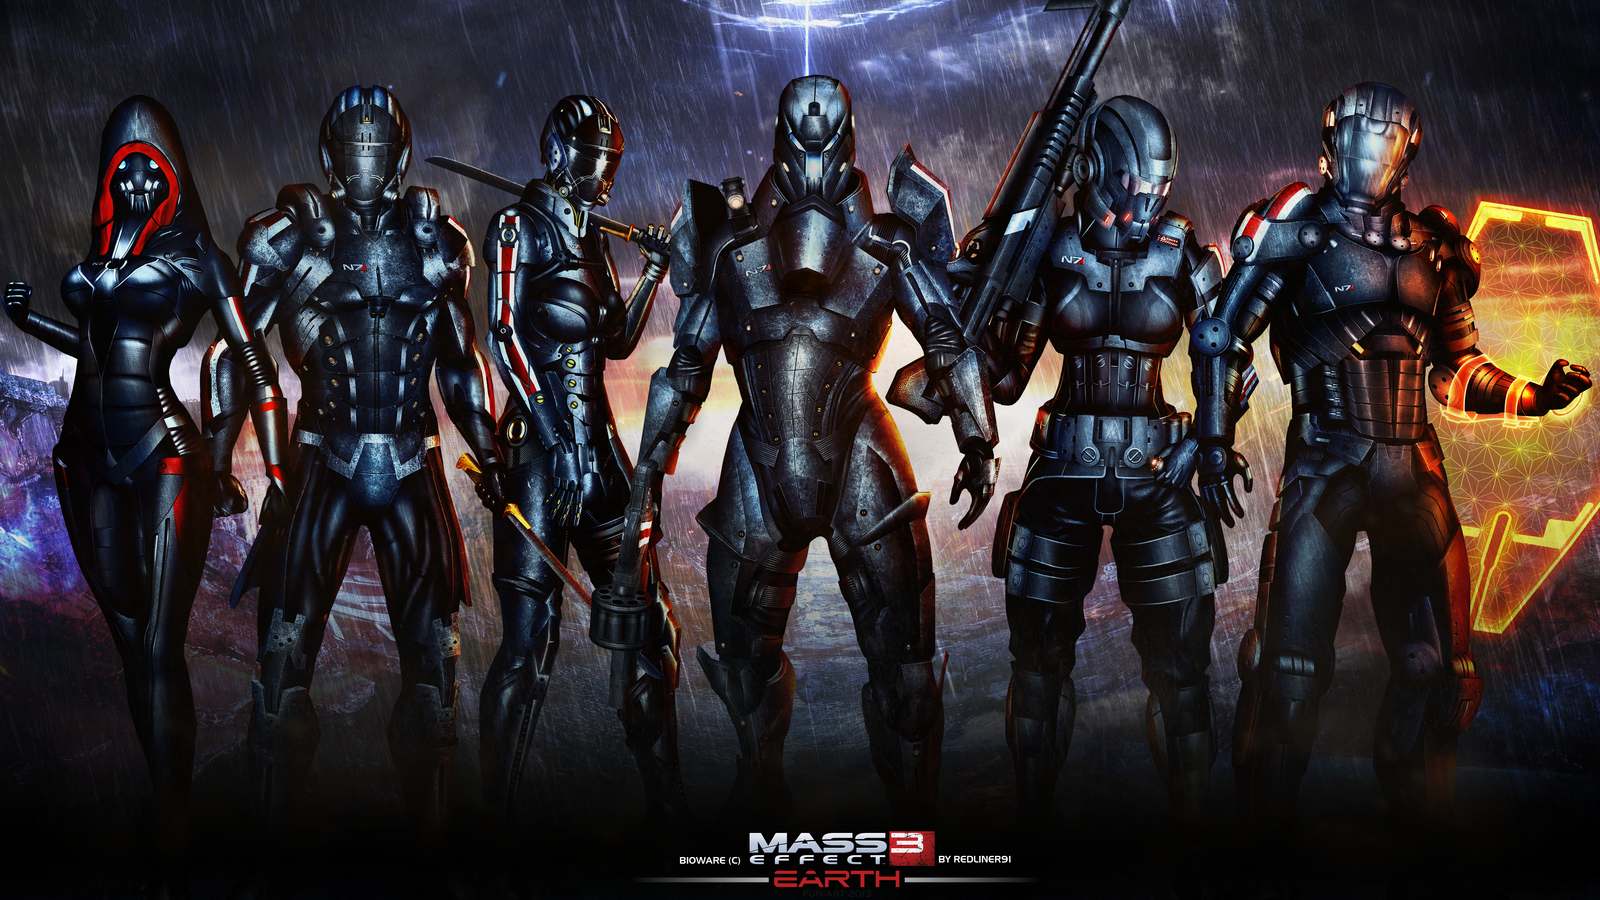 Mass Effect 3 DLC Earth Wallpaper (2013) by RedLineR91 on DeviantArt